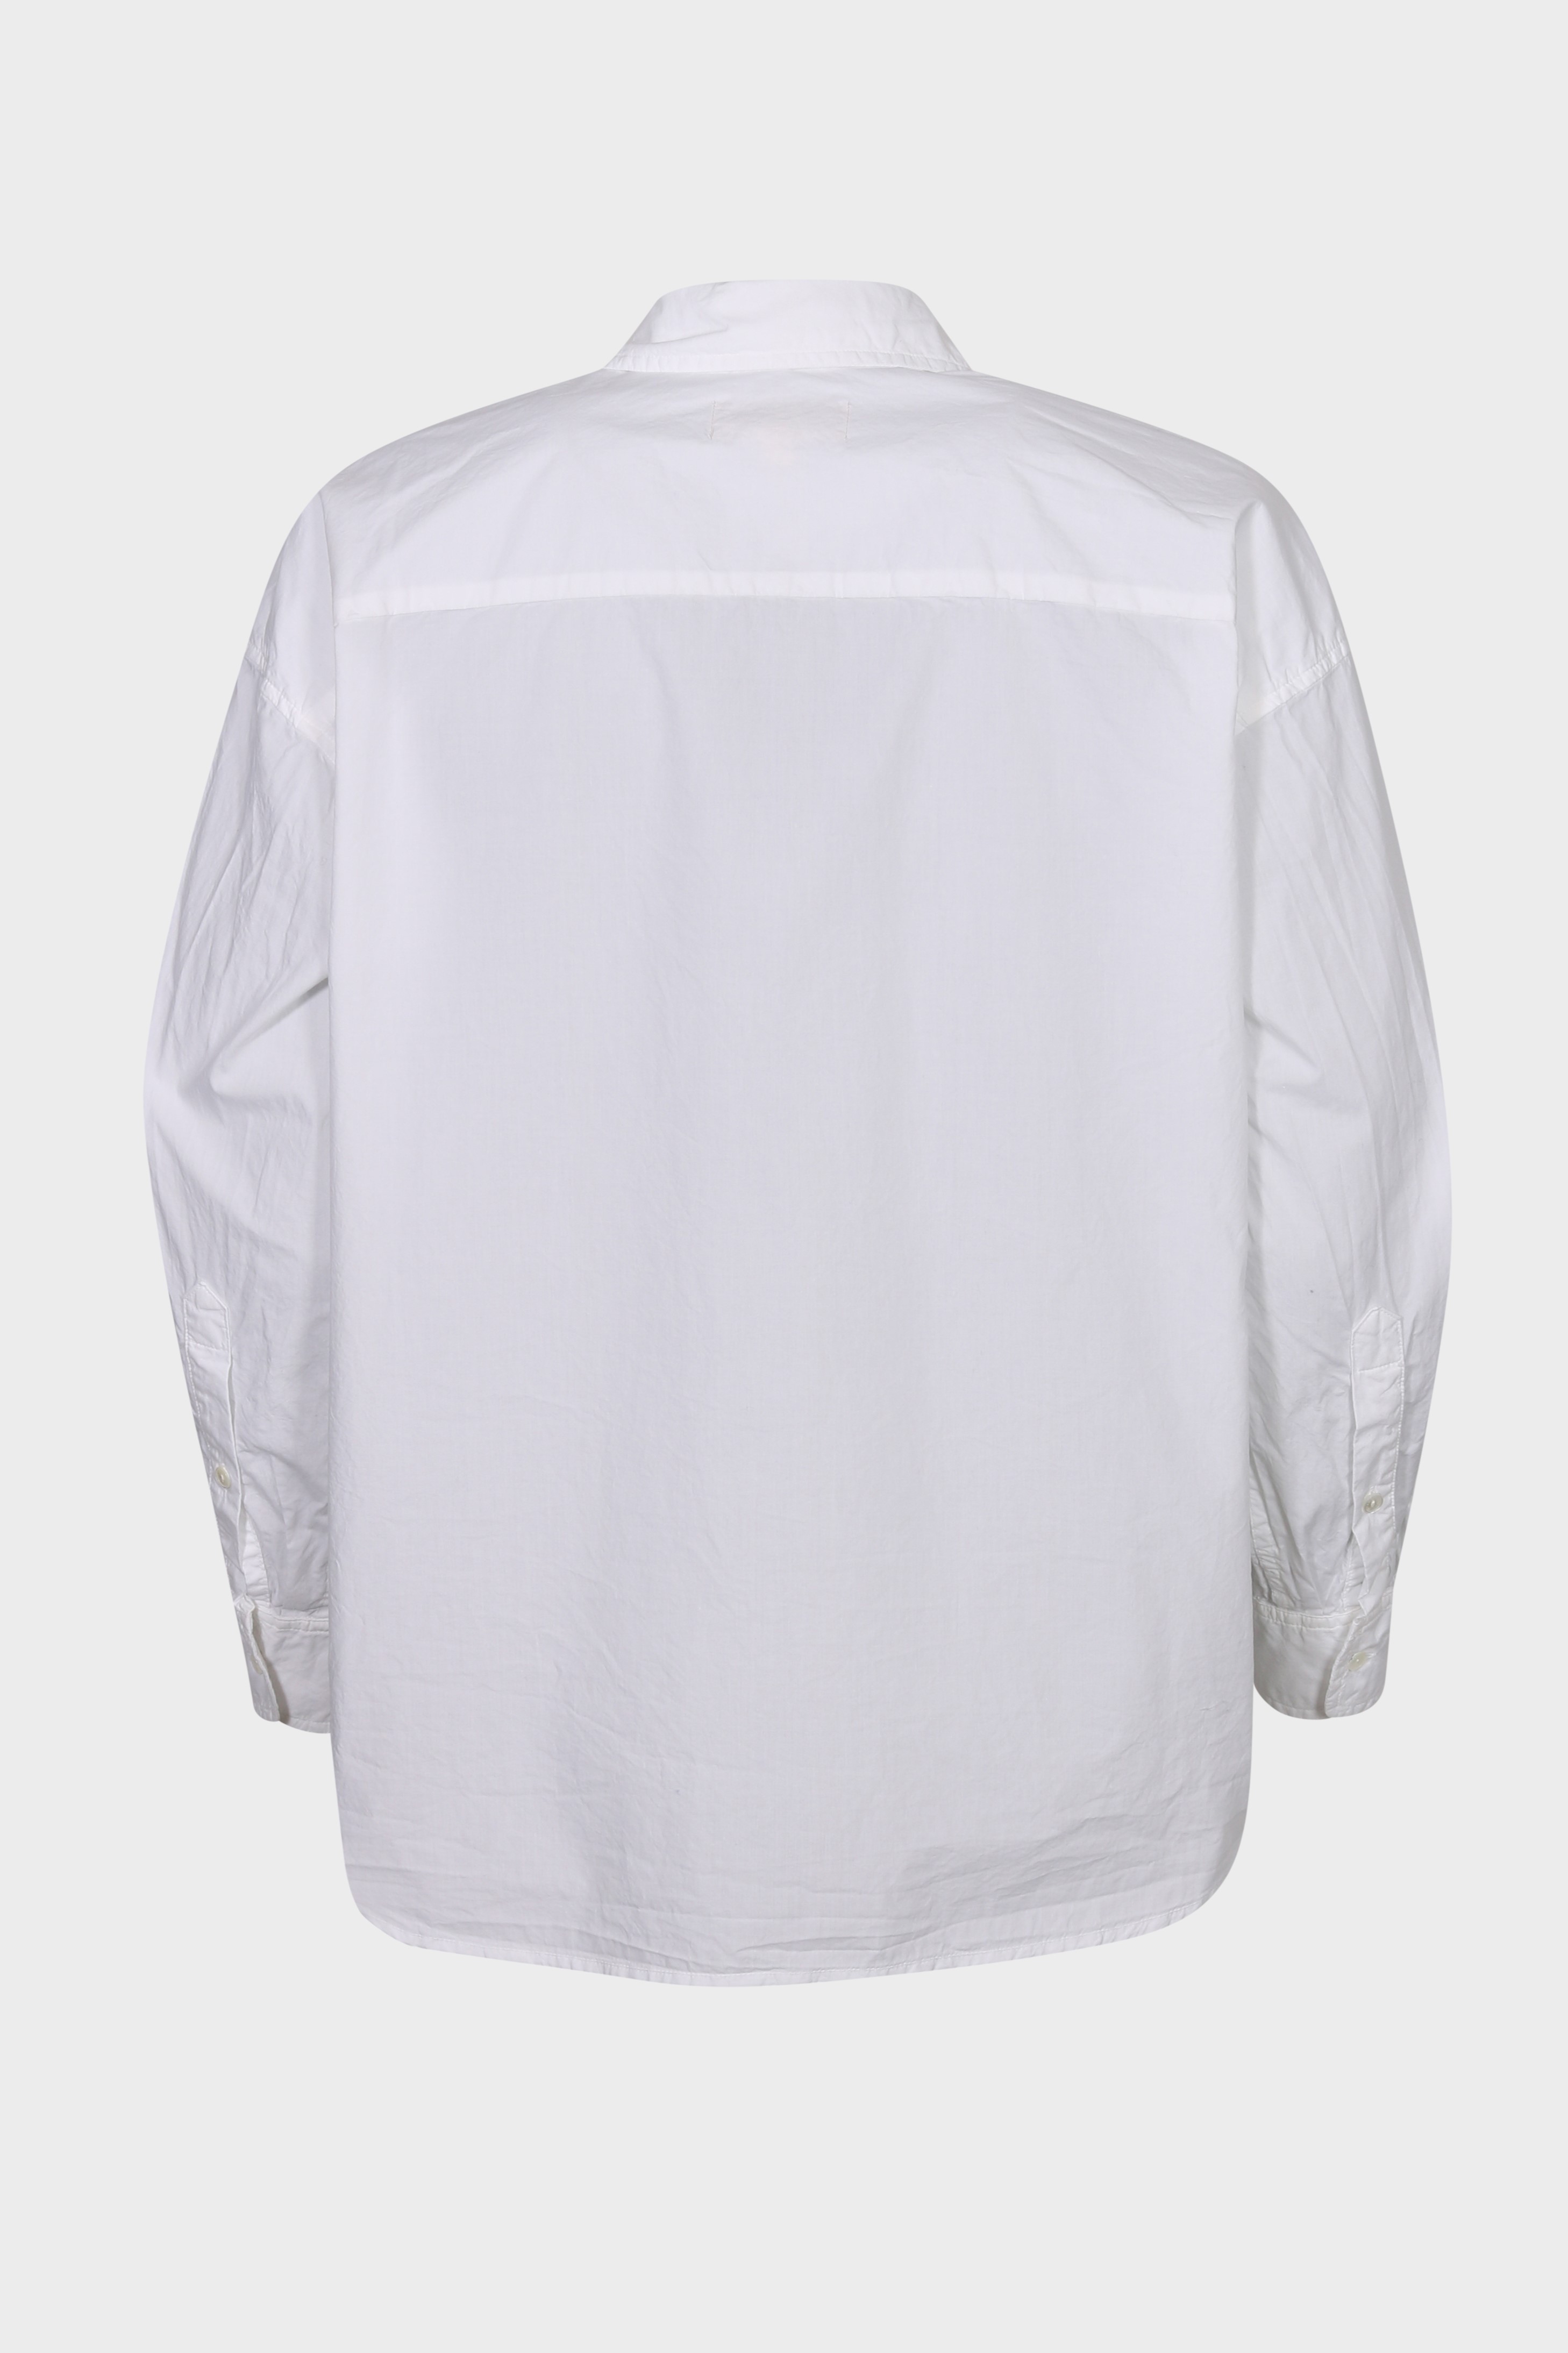 NILI LOTAN Mael Oversized Shirt in White L